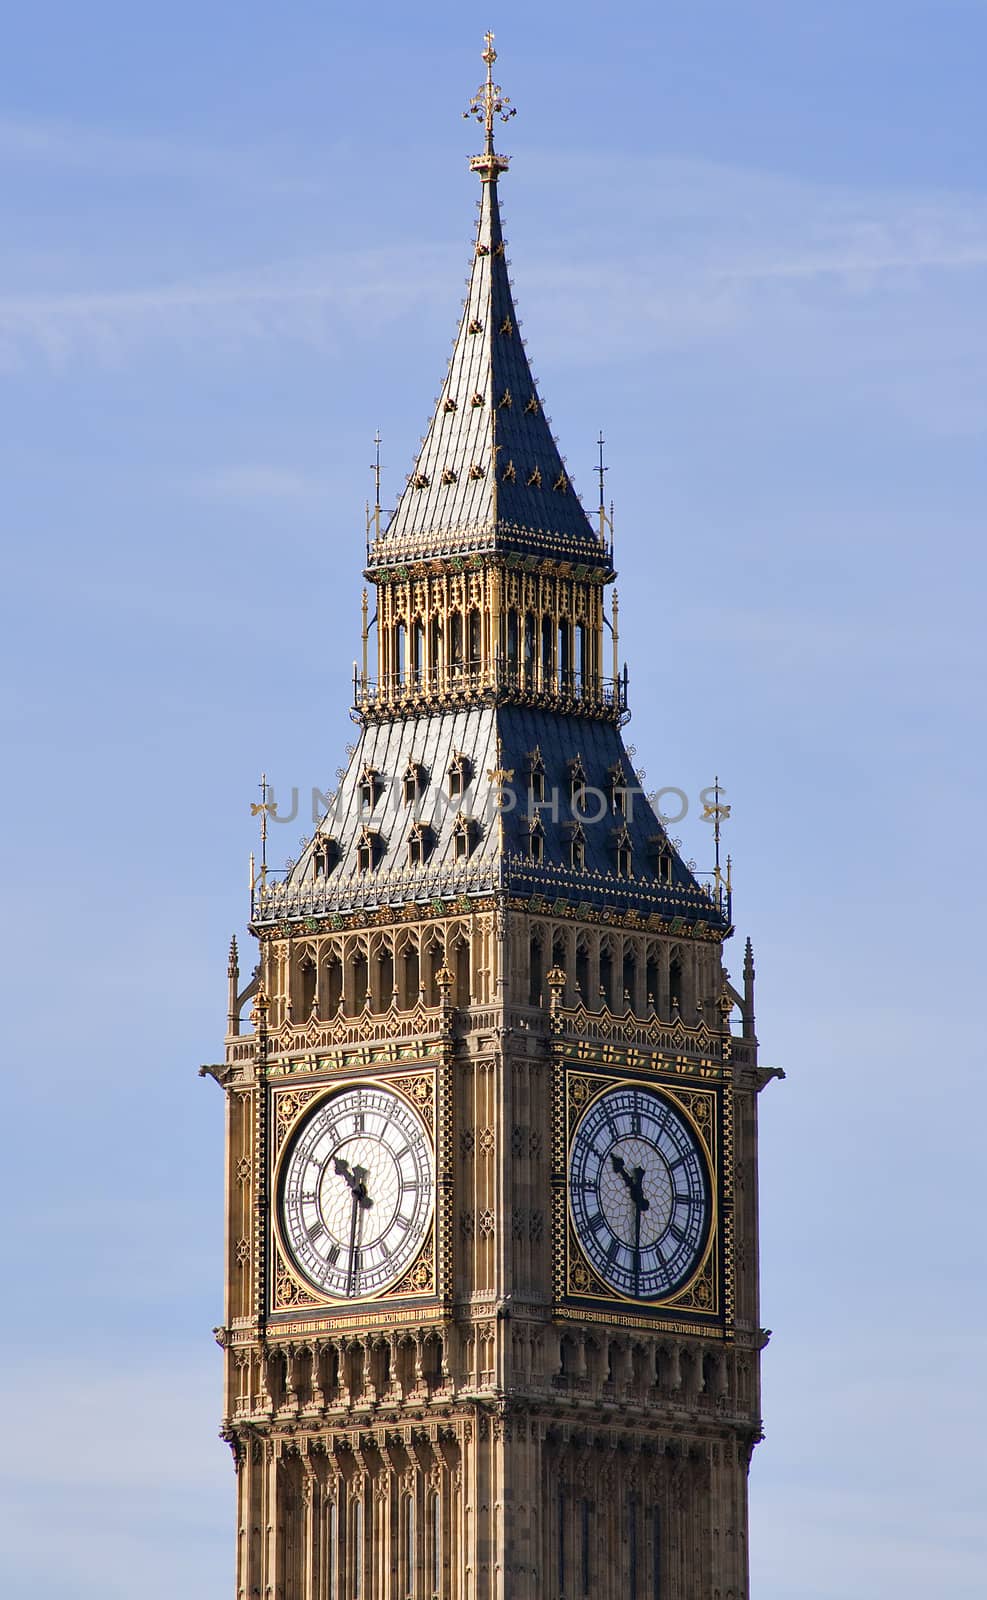 The Big Ben Tower in London by kmiragaya